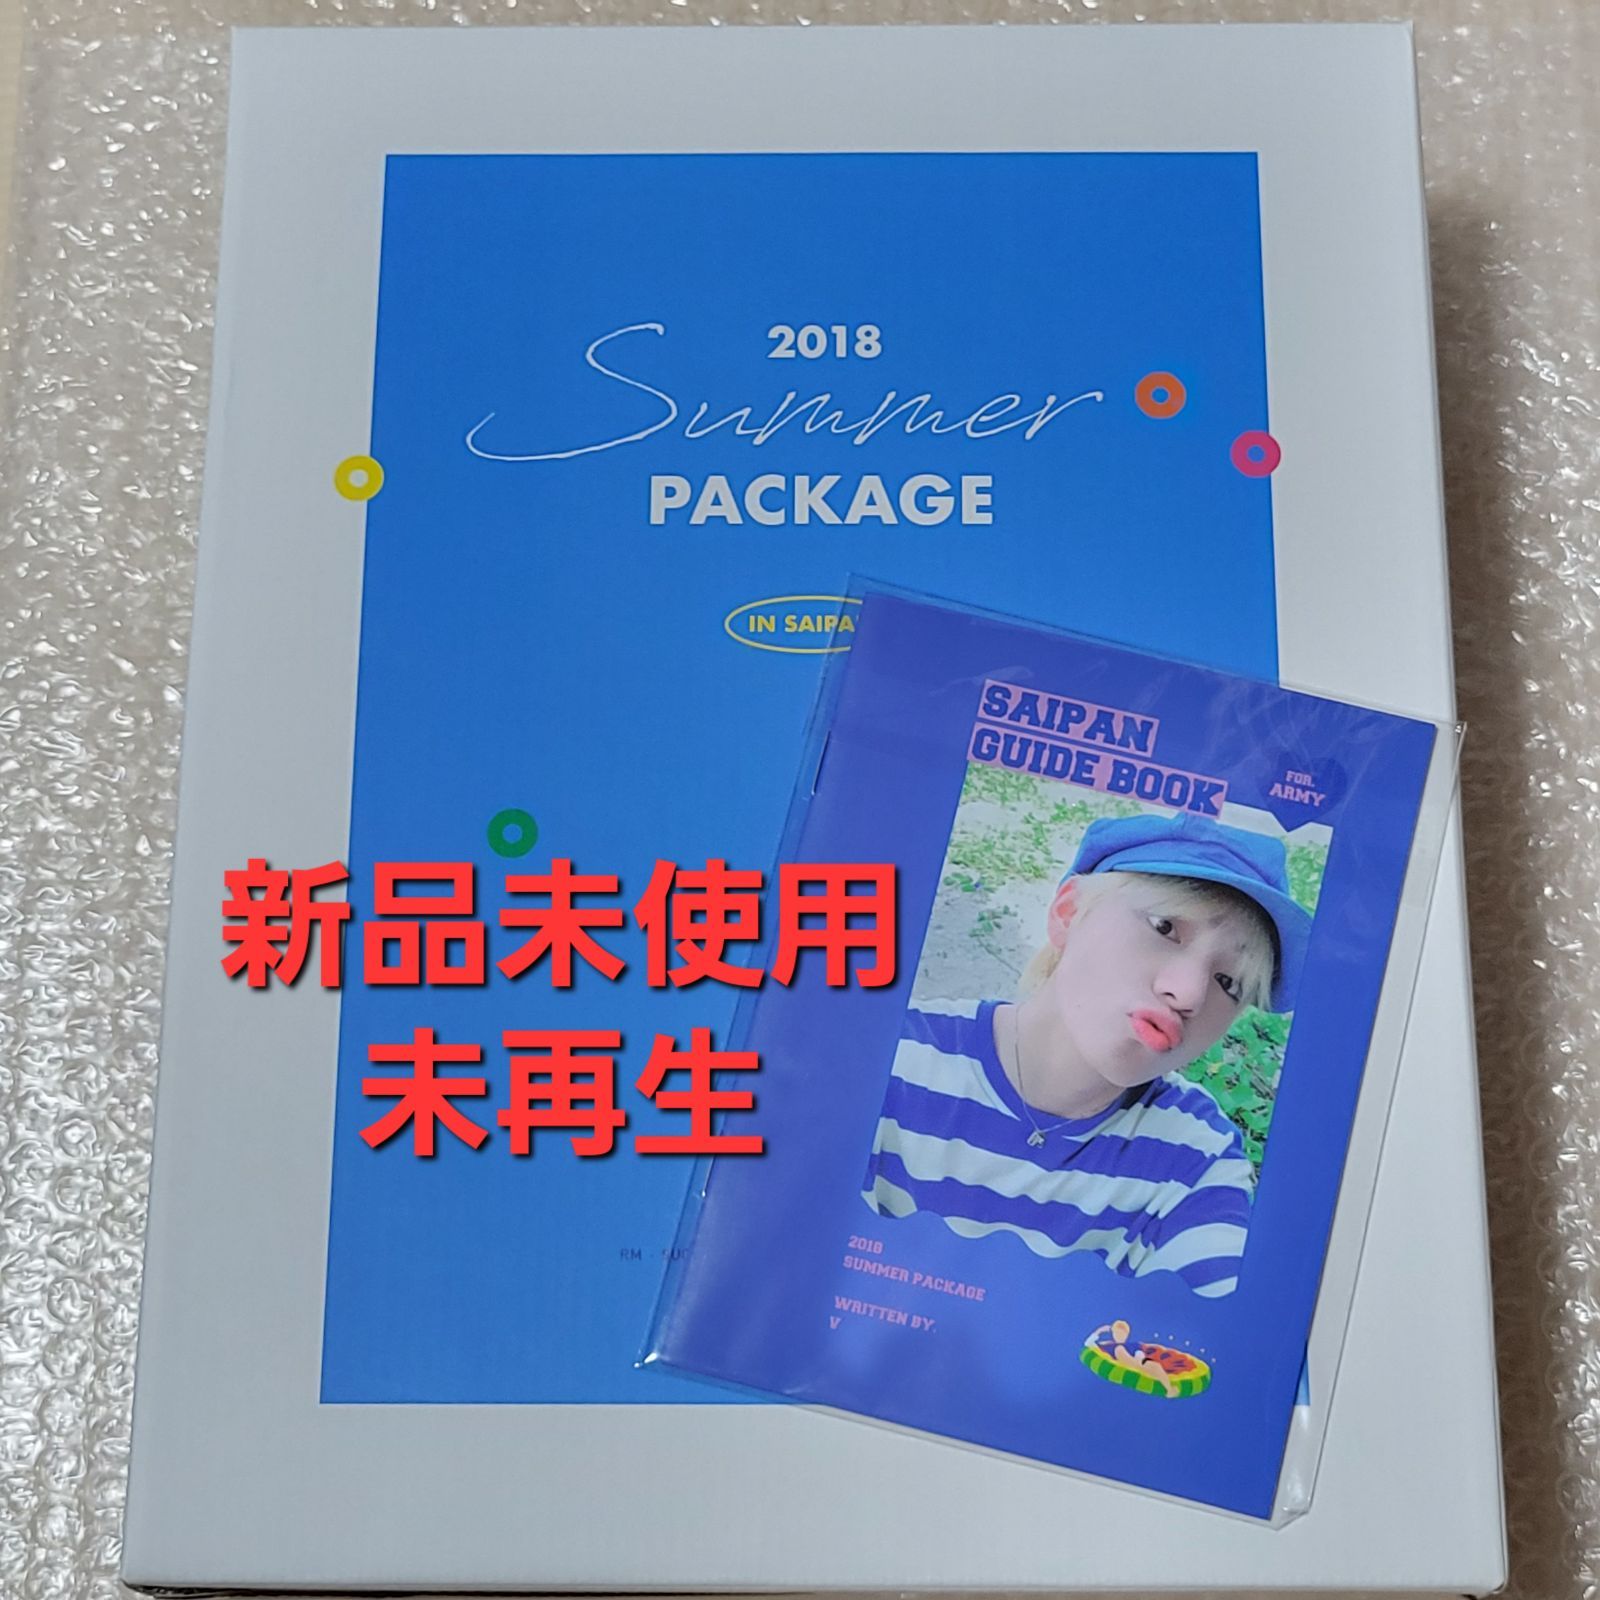 BTS サマパケ 2018 DVD - K-POP・アジア